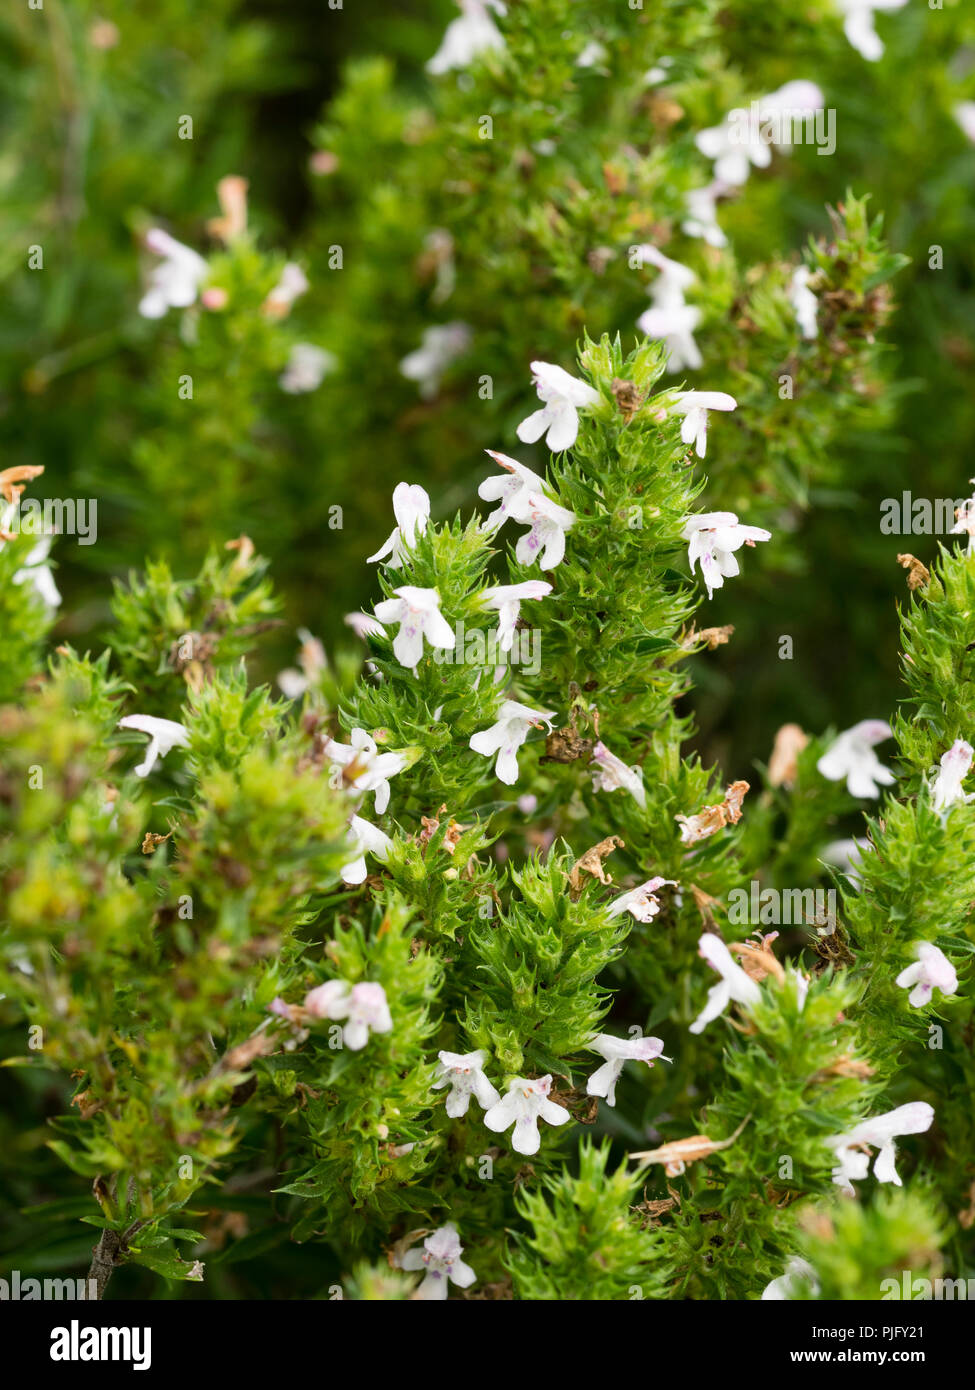 White flowers among the semi evergreen growth of the perennial winter savory herb, Satureja montana Stock Photo